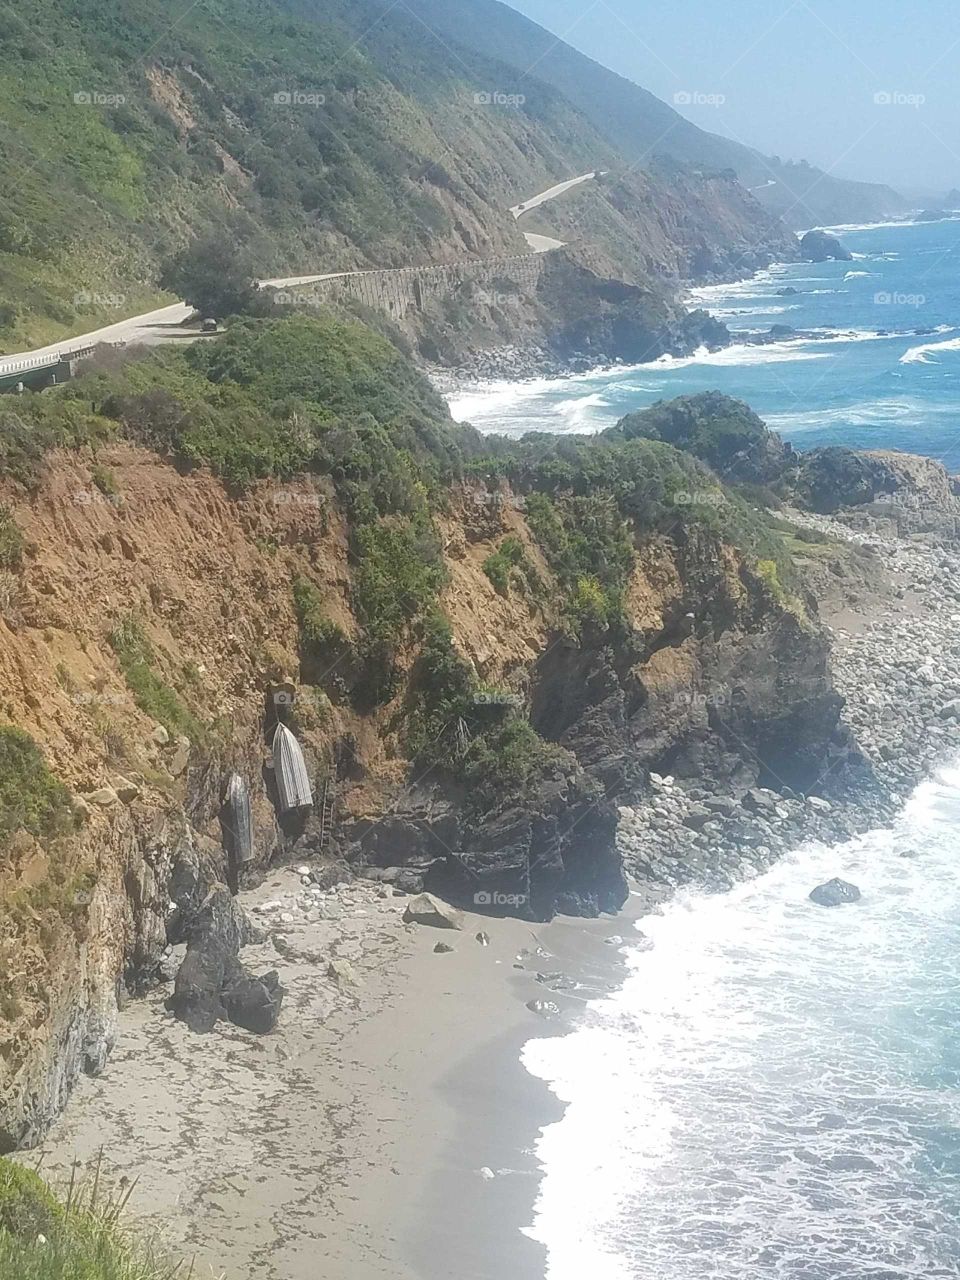 Amazing California coast line view, a site to cherish.